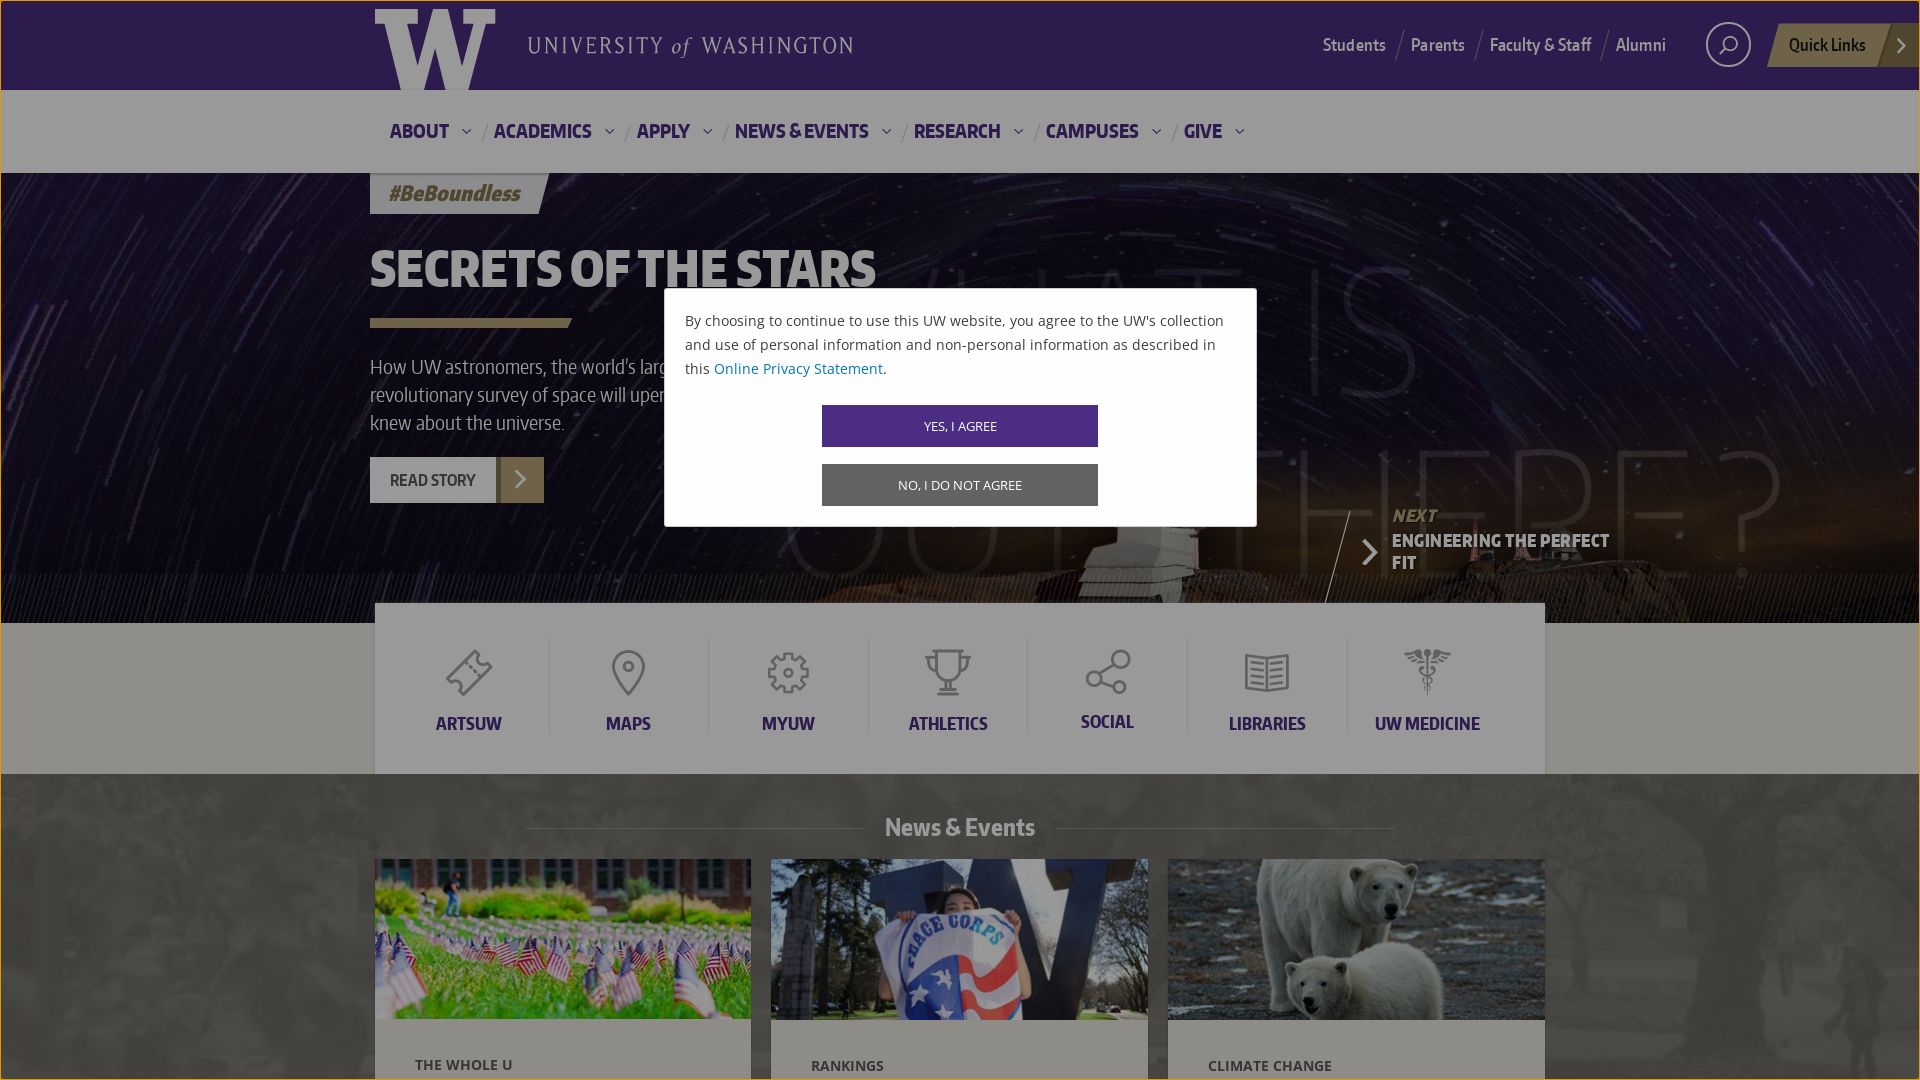 Website status washington.edu is   ONLINE